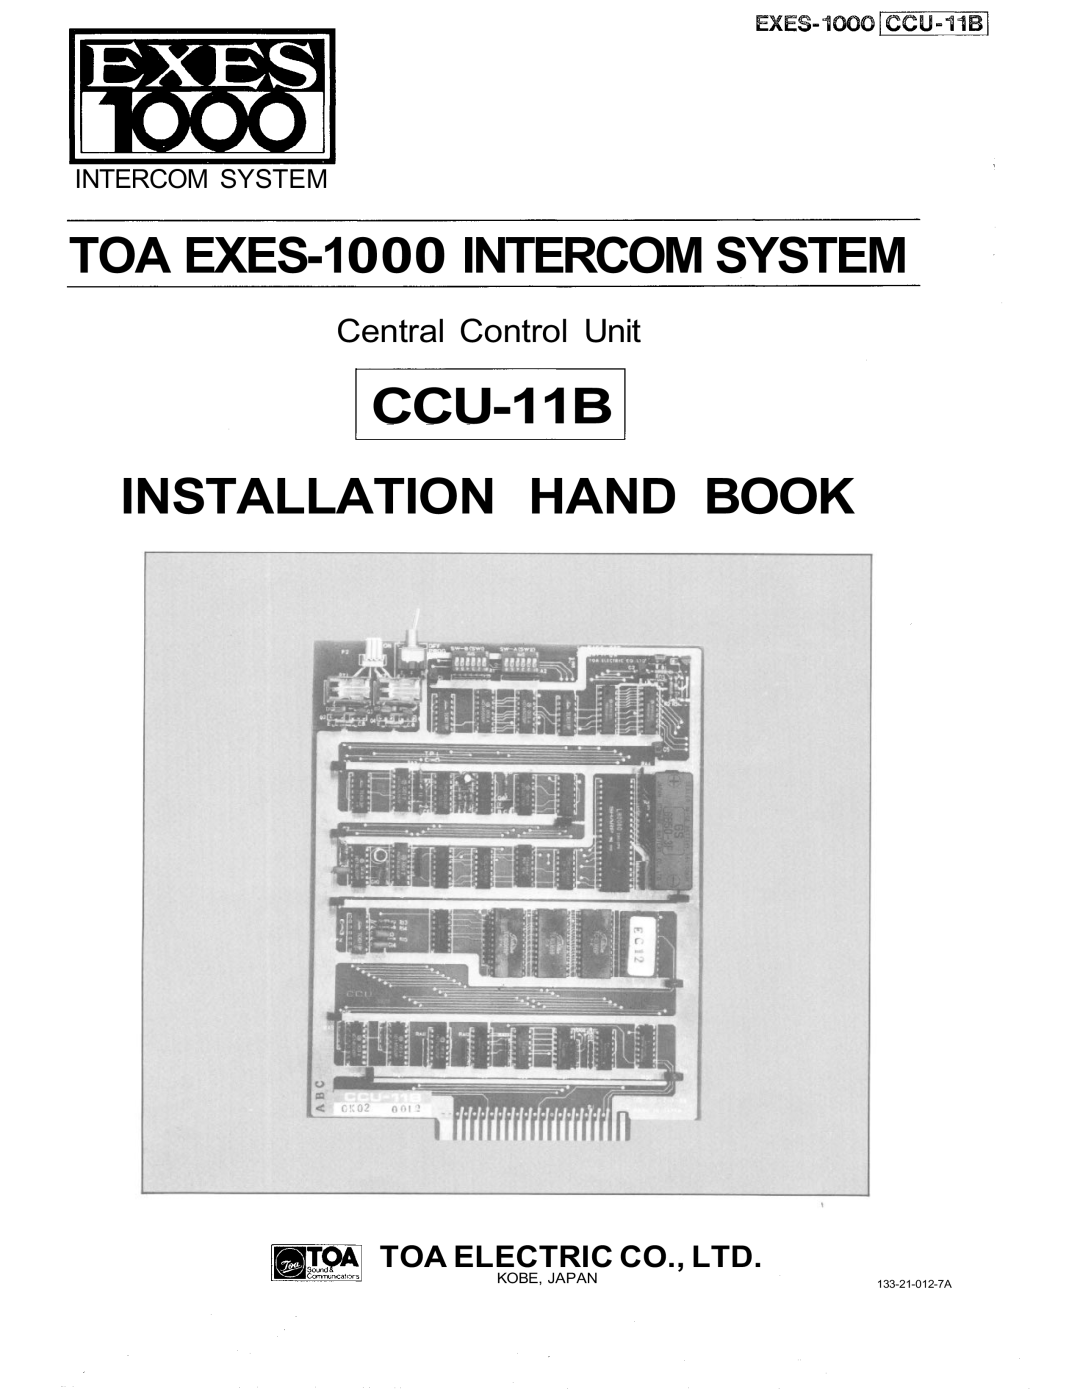 Vizio manual TOA EXES-1000 INTERCOM SYSTEM, CCU-11B INSTALLATION HAND BOOK, Central Control Unit, Intercom System 